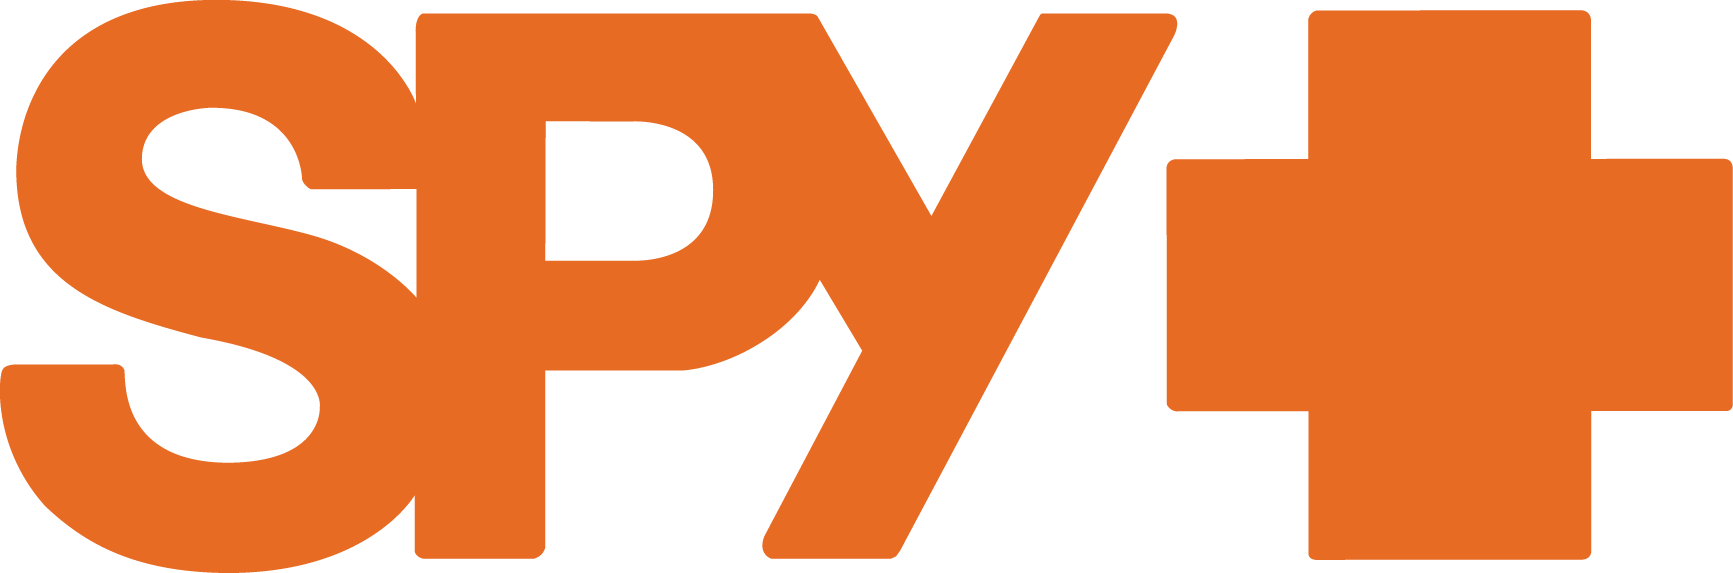 spy-logo.png